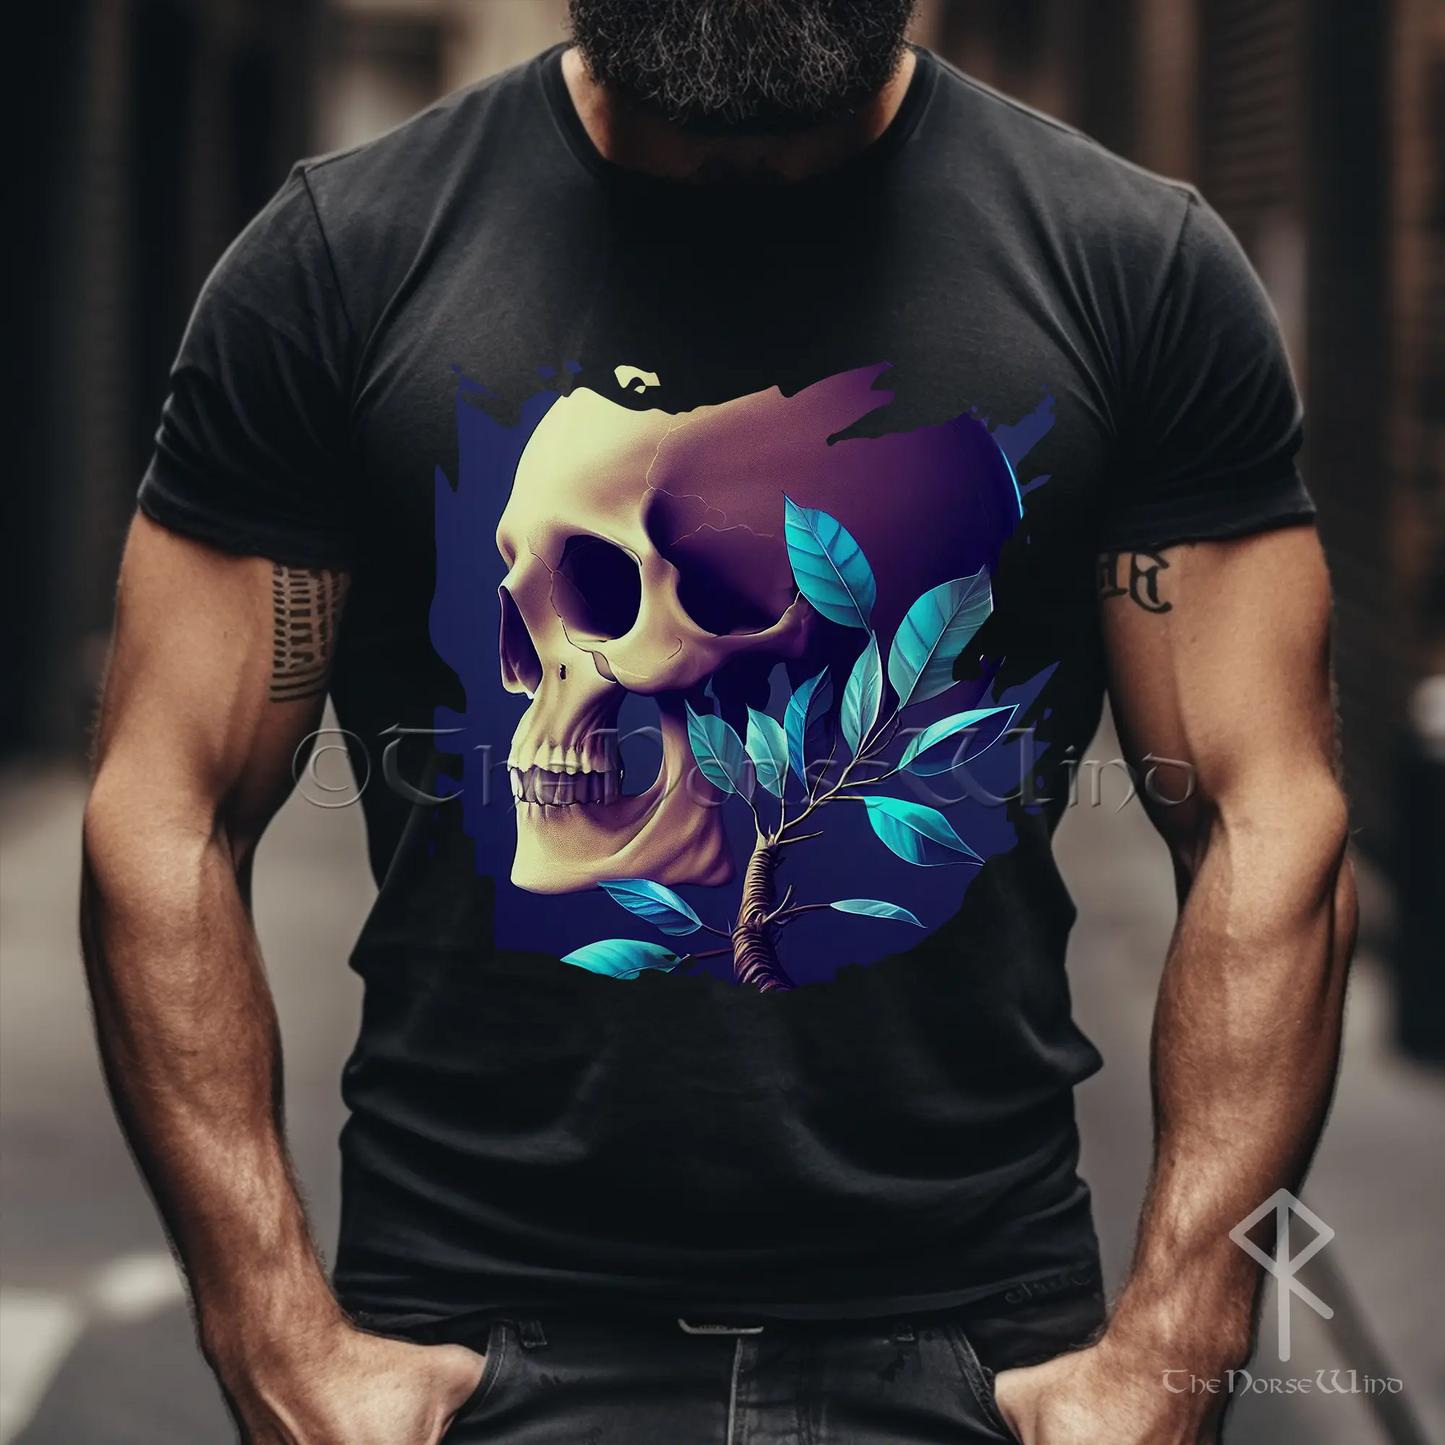 Gothic Skull T-Shirt, Dark Fantasy Art Tee, Unisex S-5XL